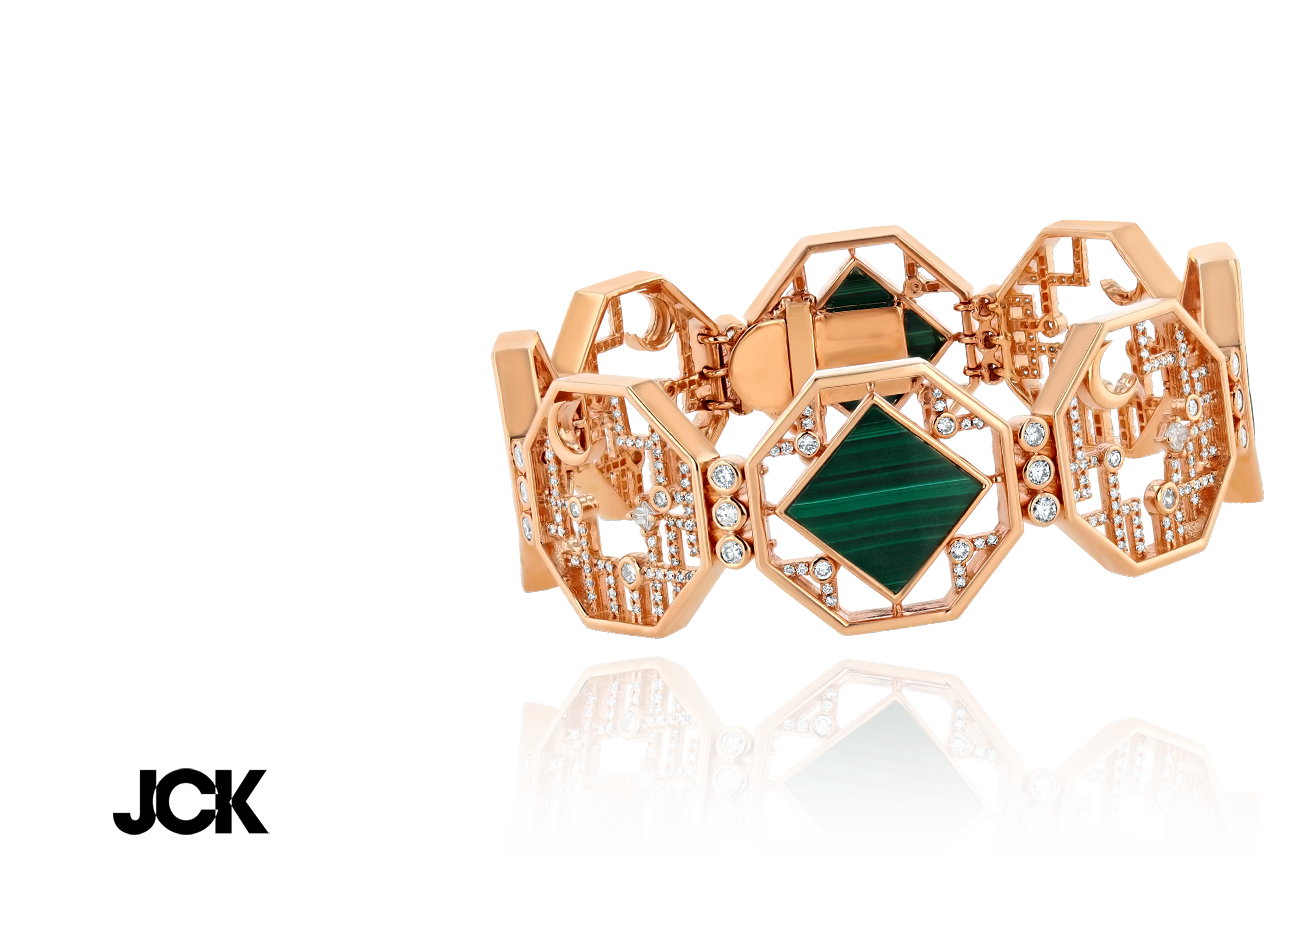 Award winning Rose Gold Grand Castle Bracelet with Diamonds and Malachite, alongside JCK logo